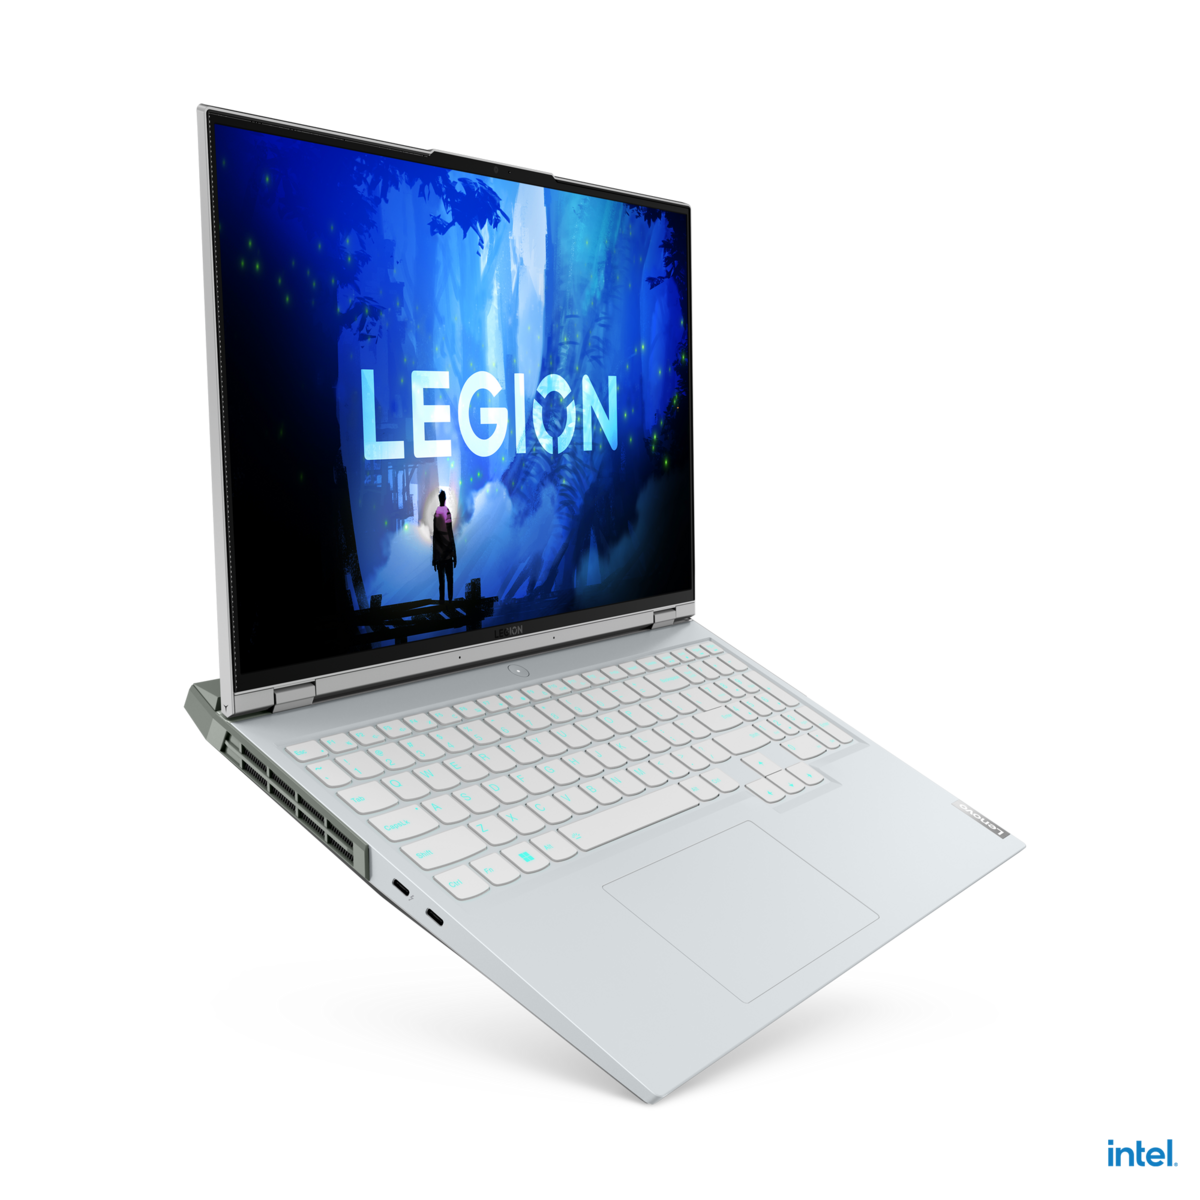 Legion 5i Pro